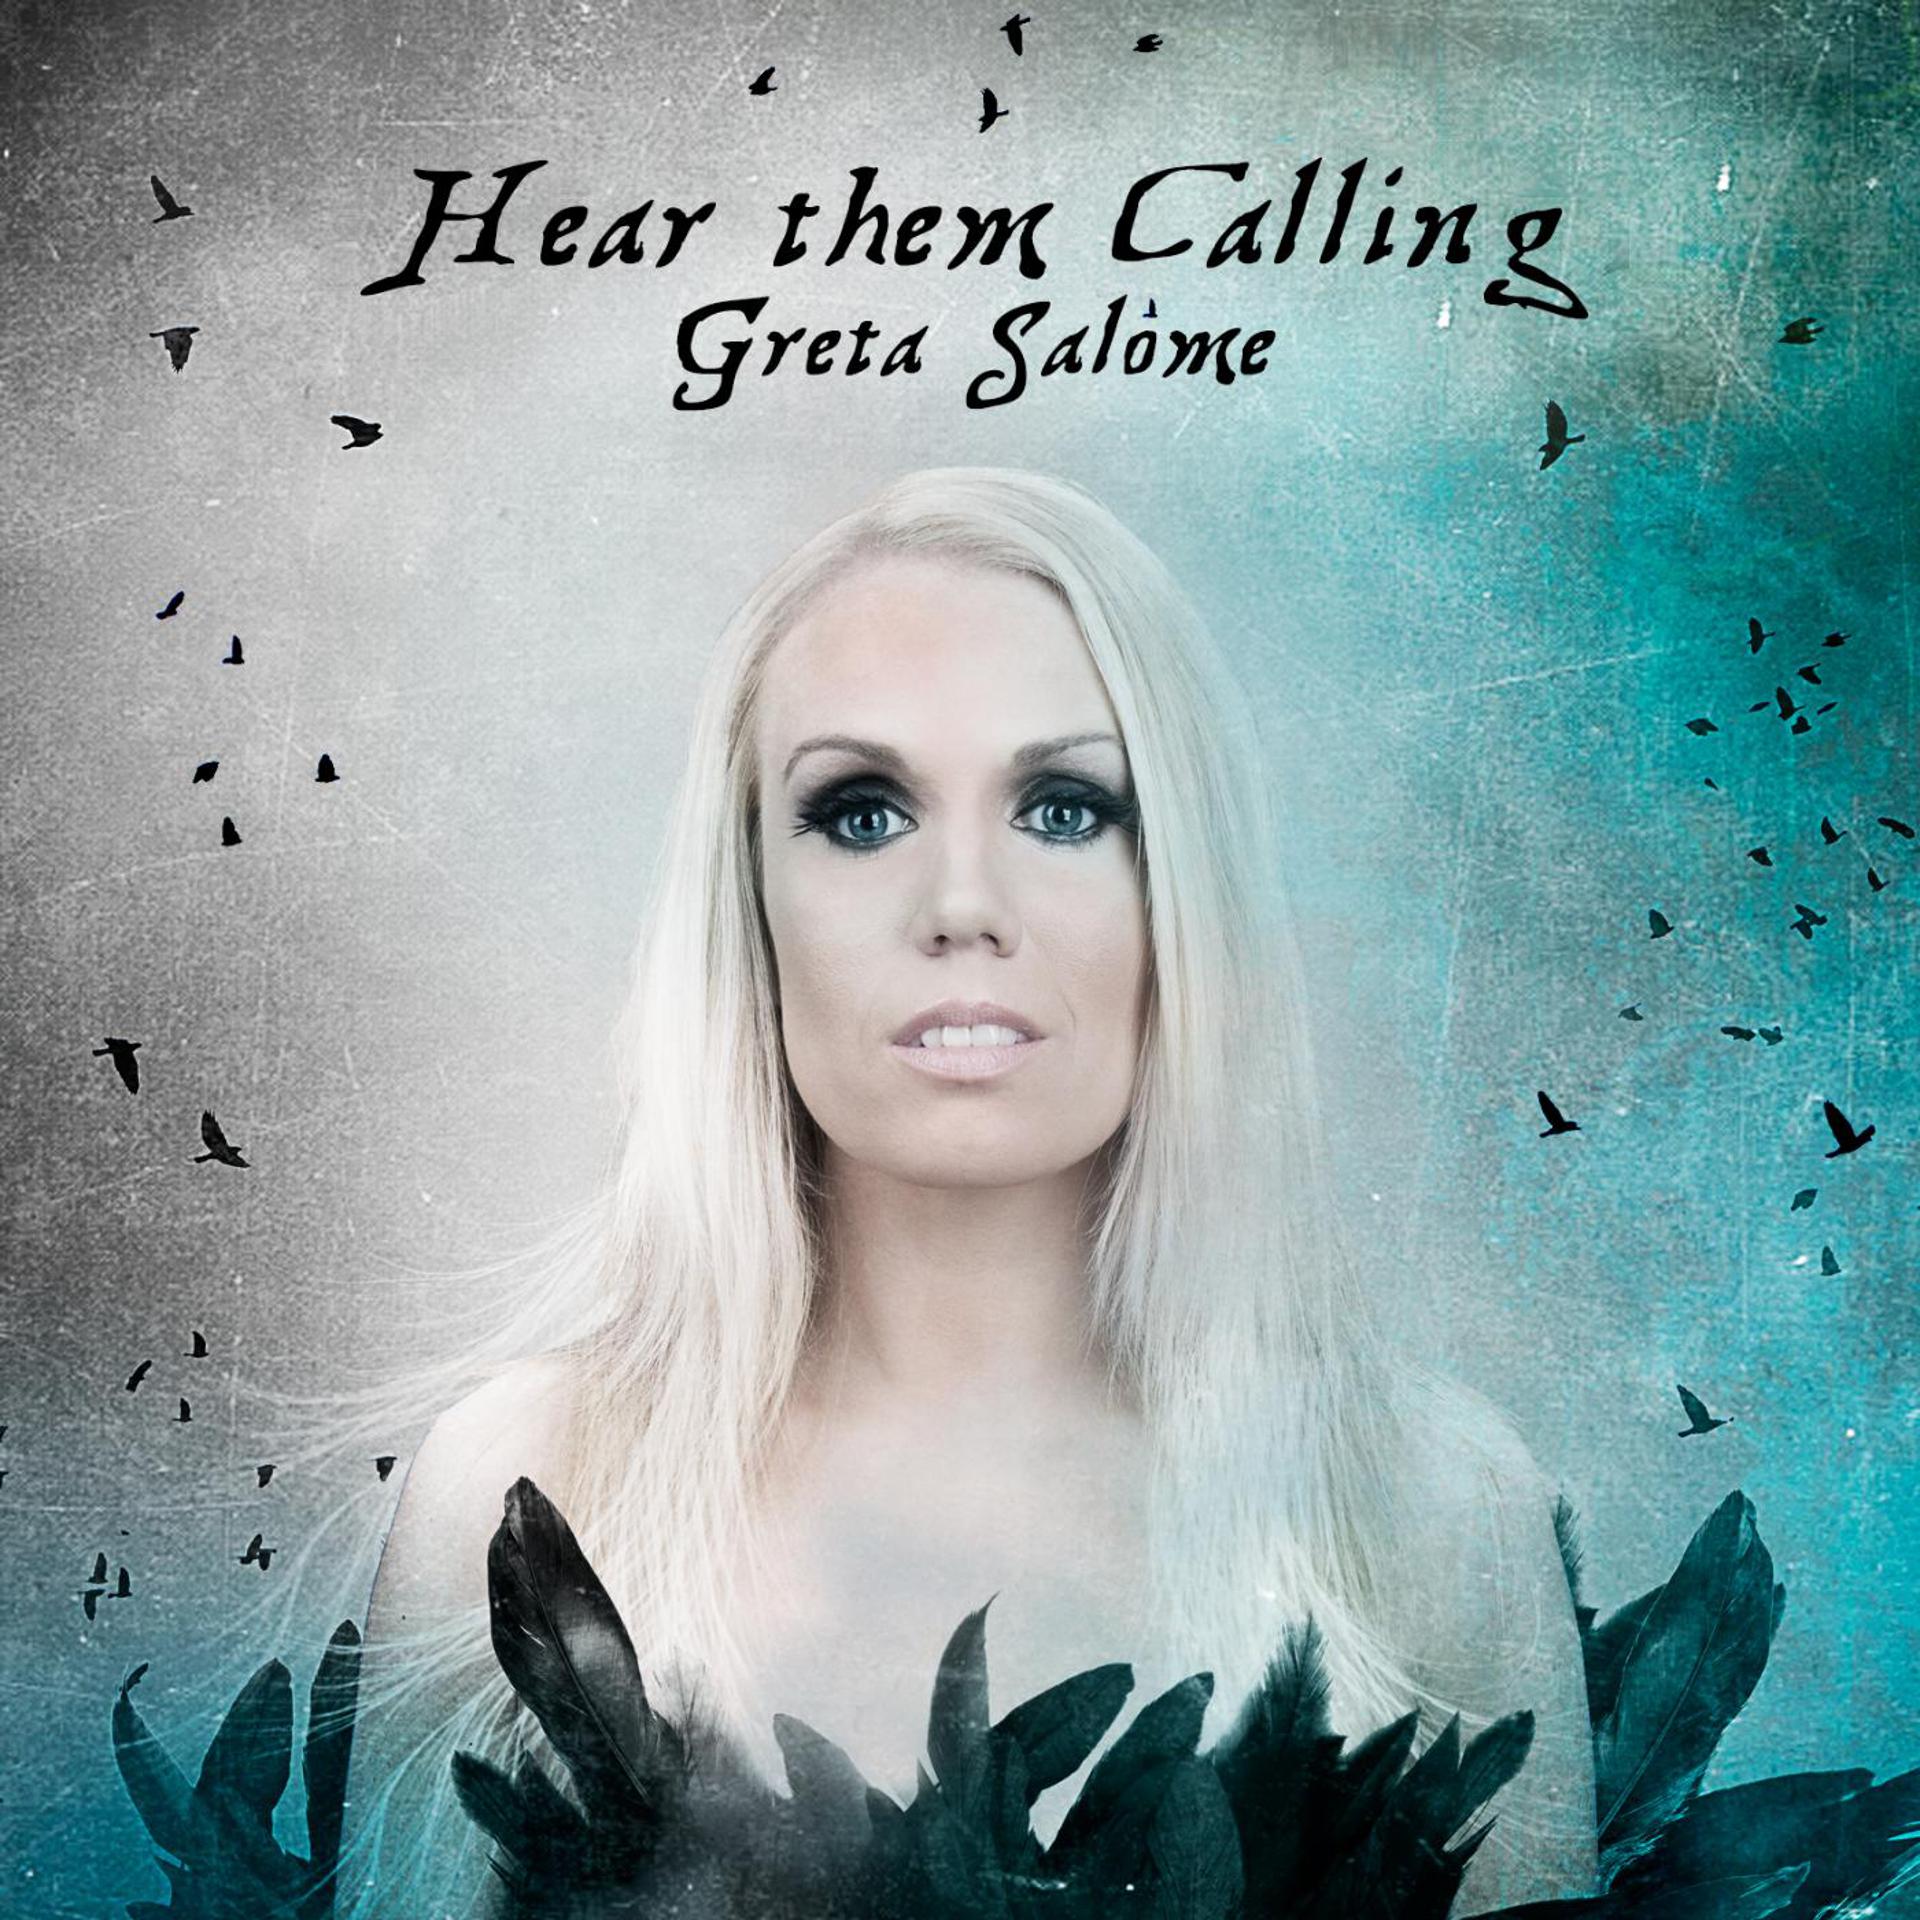 Hear them calling. Greta Salome. Hear them calling Greta. Im hear them calling.